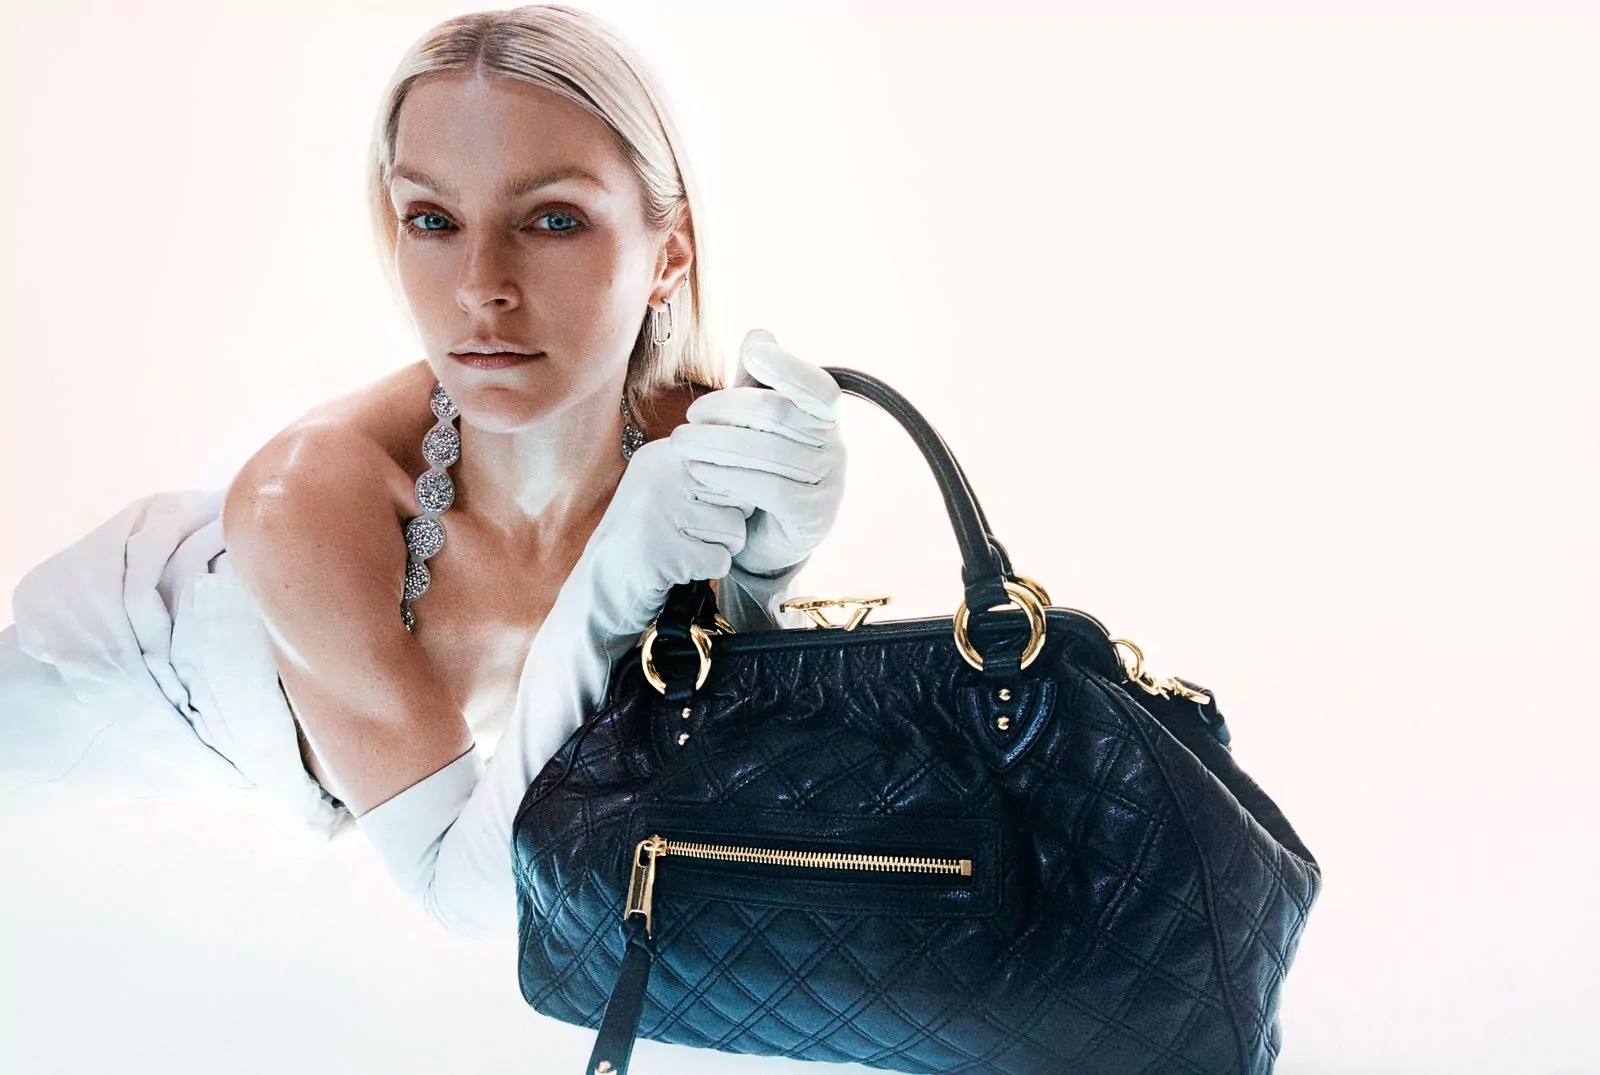 Джессика Стэм в рекламной кампании сумки Stam от Marc Jacobs, 8 марта 2023 г.